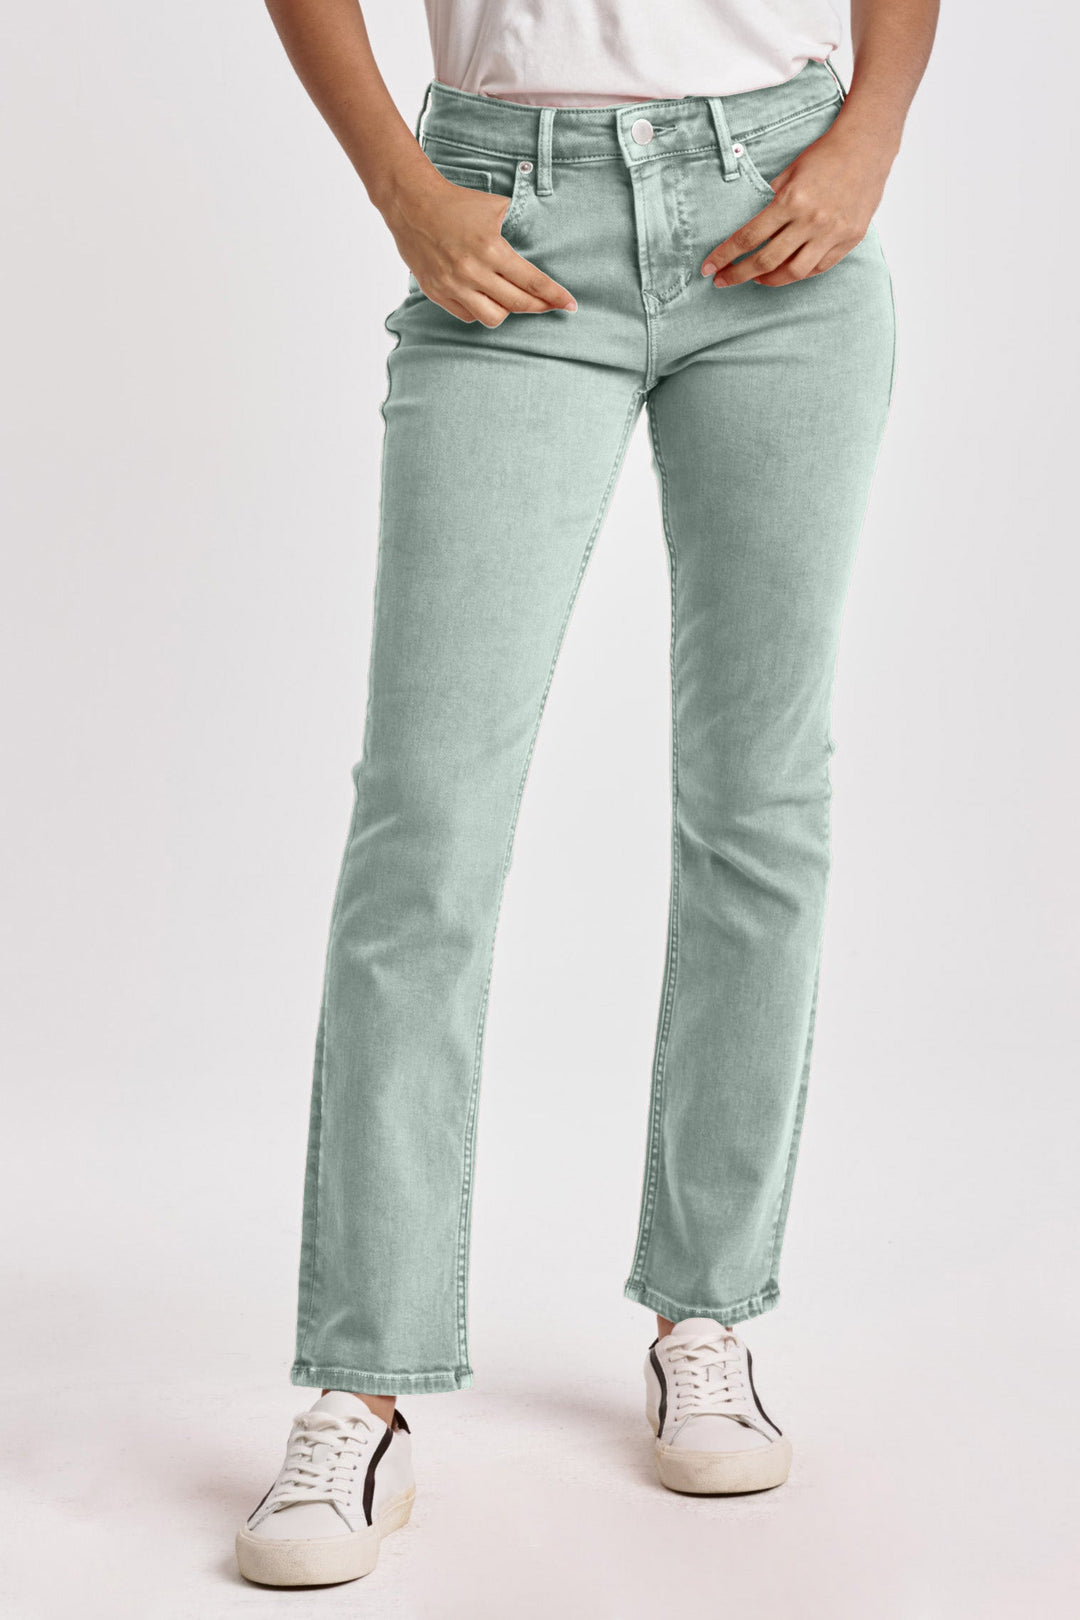 blaire-high-rise-slim-straight-jeans-fresh-mint